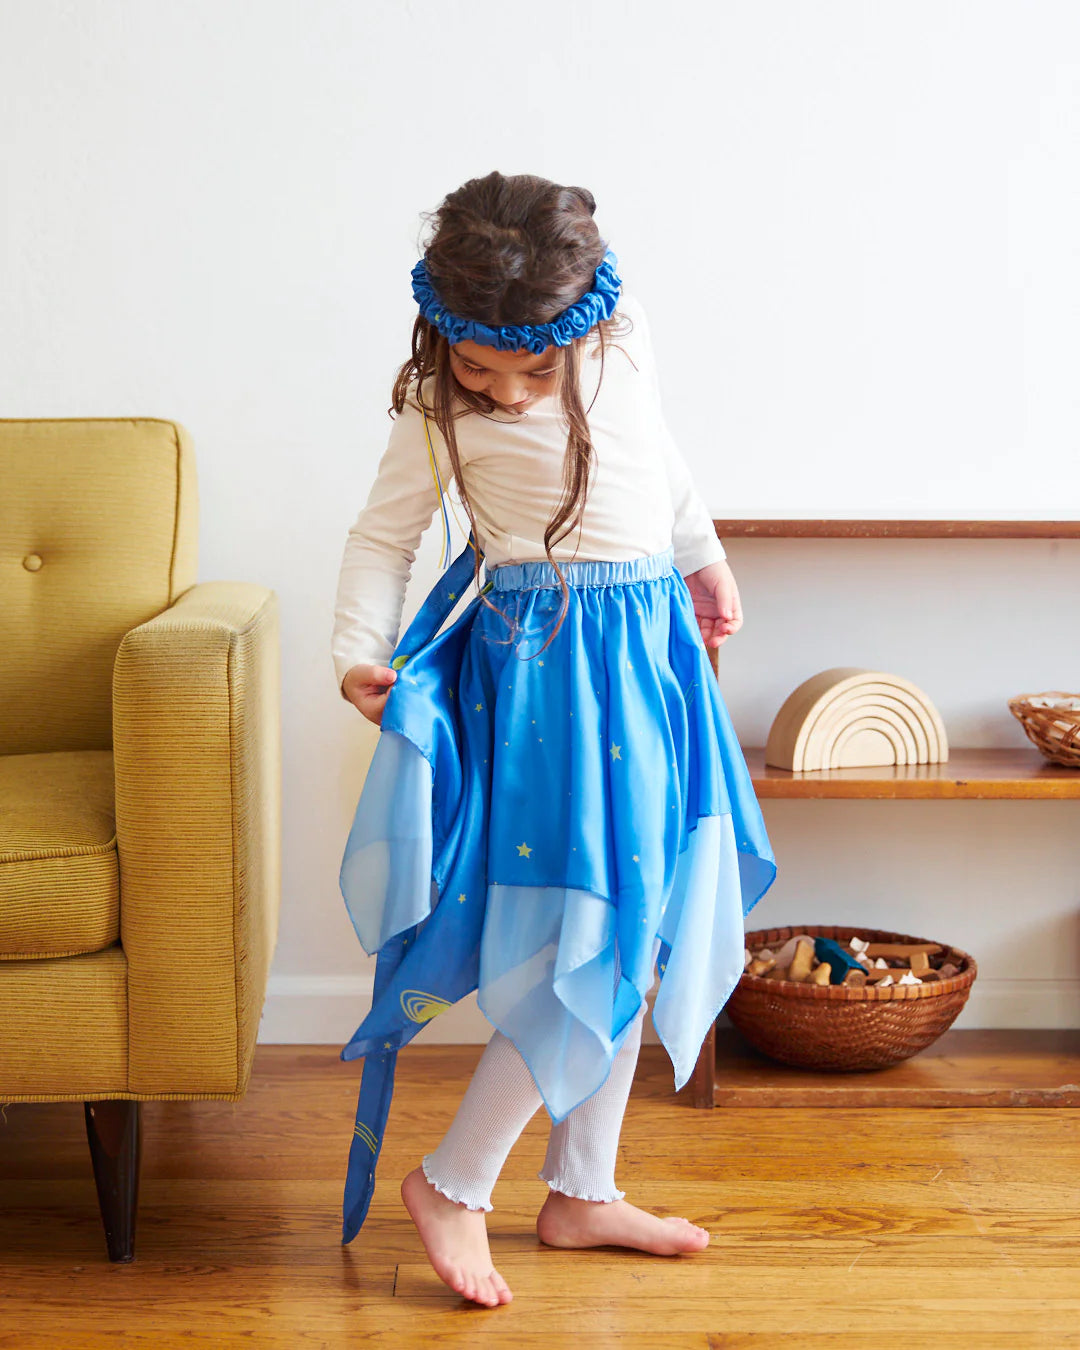 Reversible Fairy Skirt - Starry Night